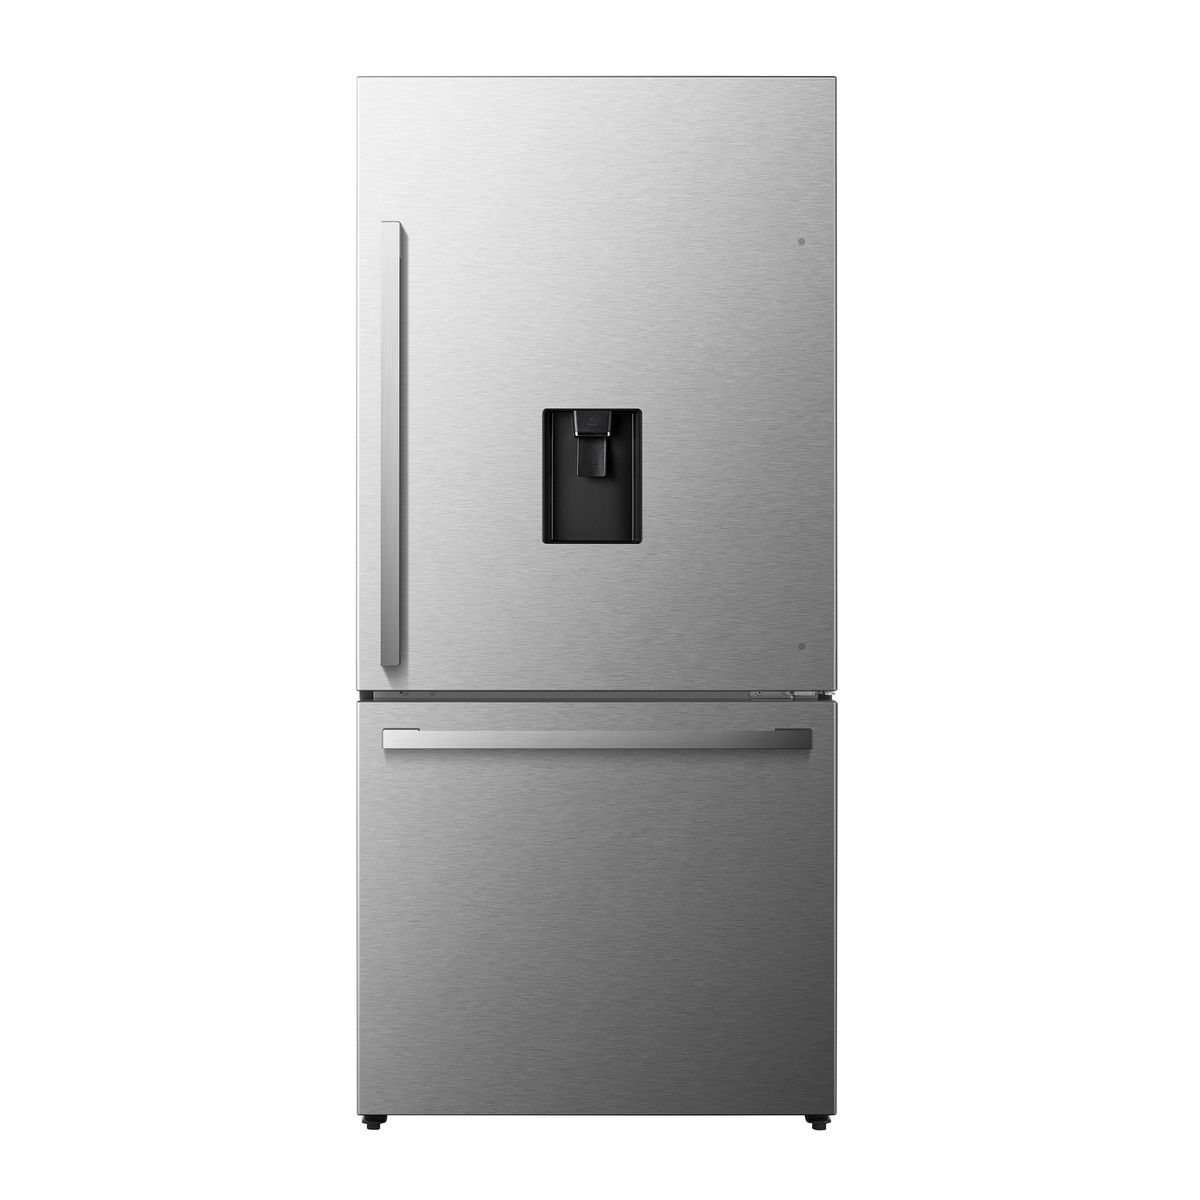 Hisense 441l Bottom Freezer Fridge With Water Dispenser Stainless Steel Buy Online In South 1187